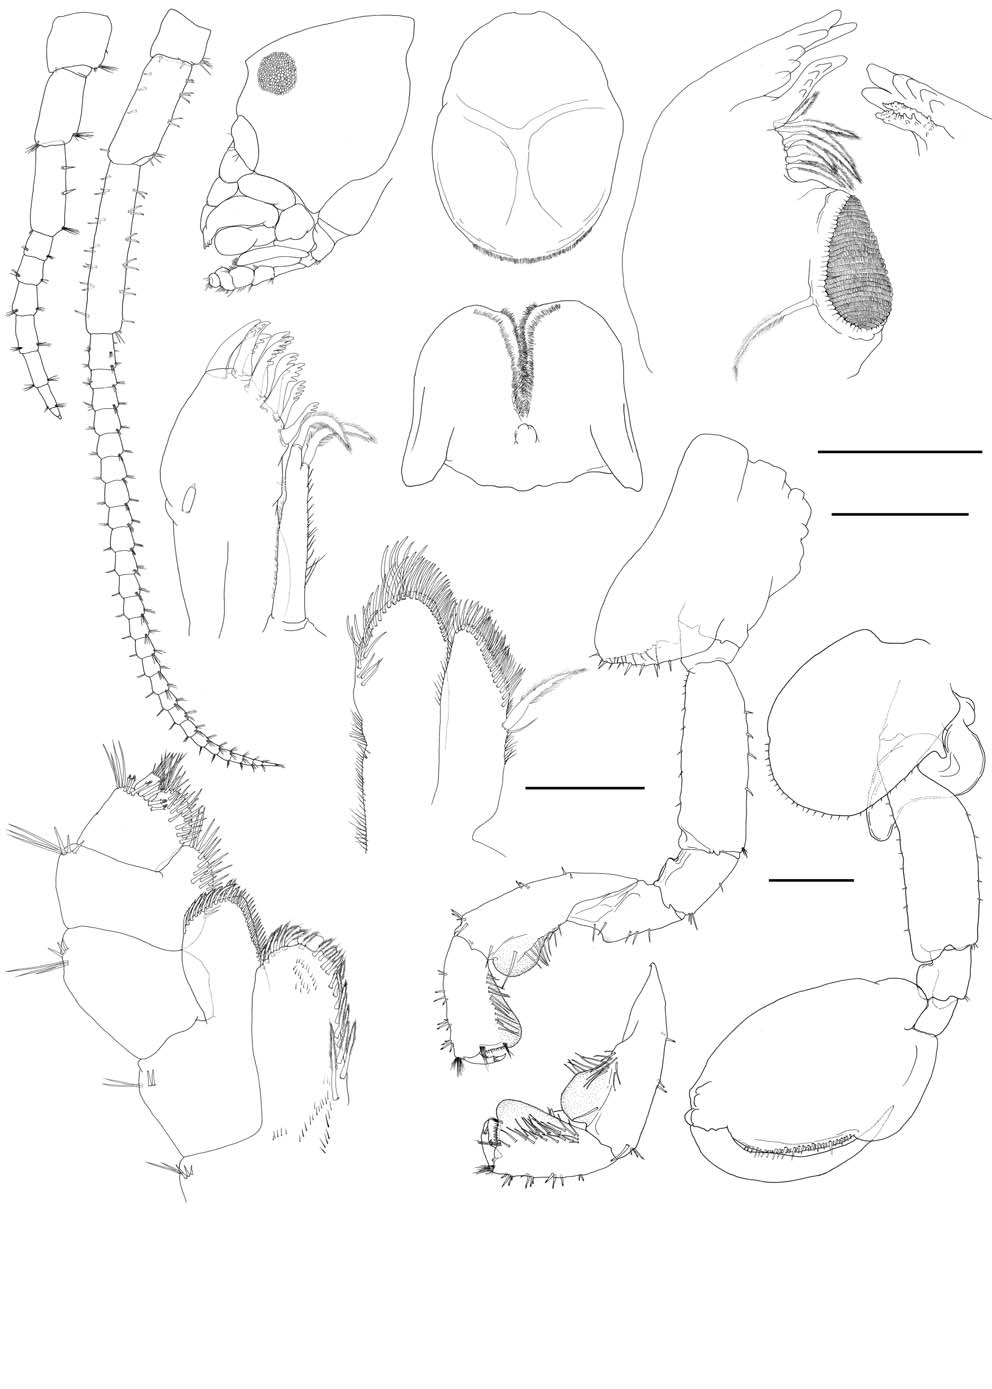 Paciforchestia pyatakovi (Derzhavin 1937) male. A Antenna 1; B Antenna 2; C Head; D Upper lip; E Left mandible; FIncisor of right mandible; G Lower lip; H Maxilla 1; I Maxilla 2; J Maxilliped; K Gnathopod 1; L Inner margins of carpus and propodus of gnathopod 1; M Gnathopod 2. Scale bars: A-C K-M=1 mm D G=0.5 mm E F H-J=0.25 mm.